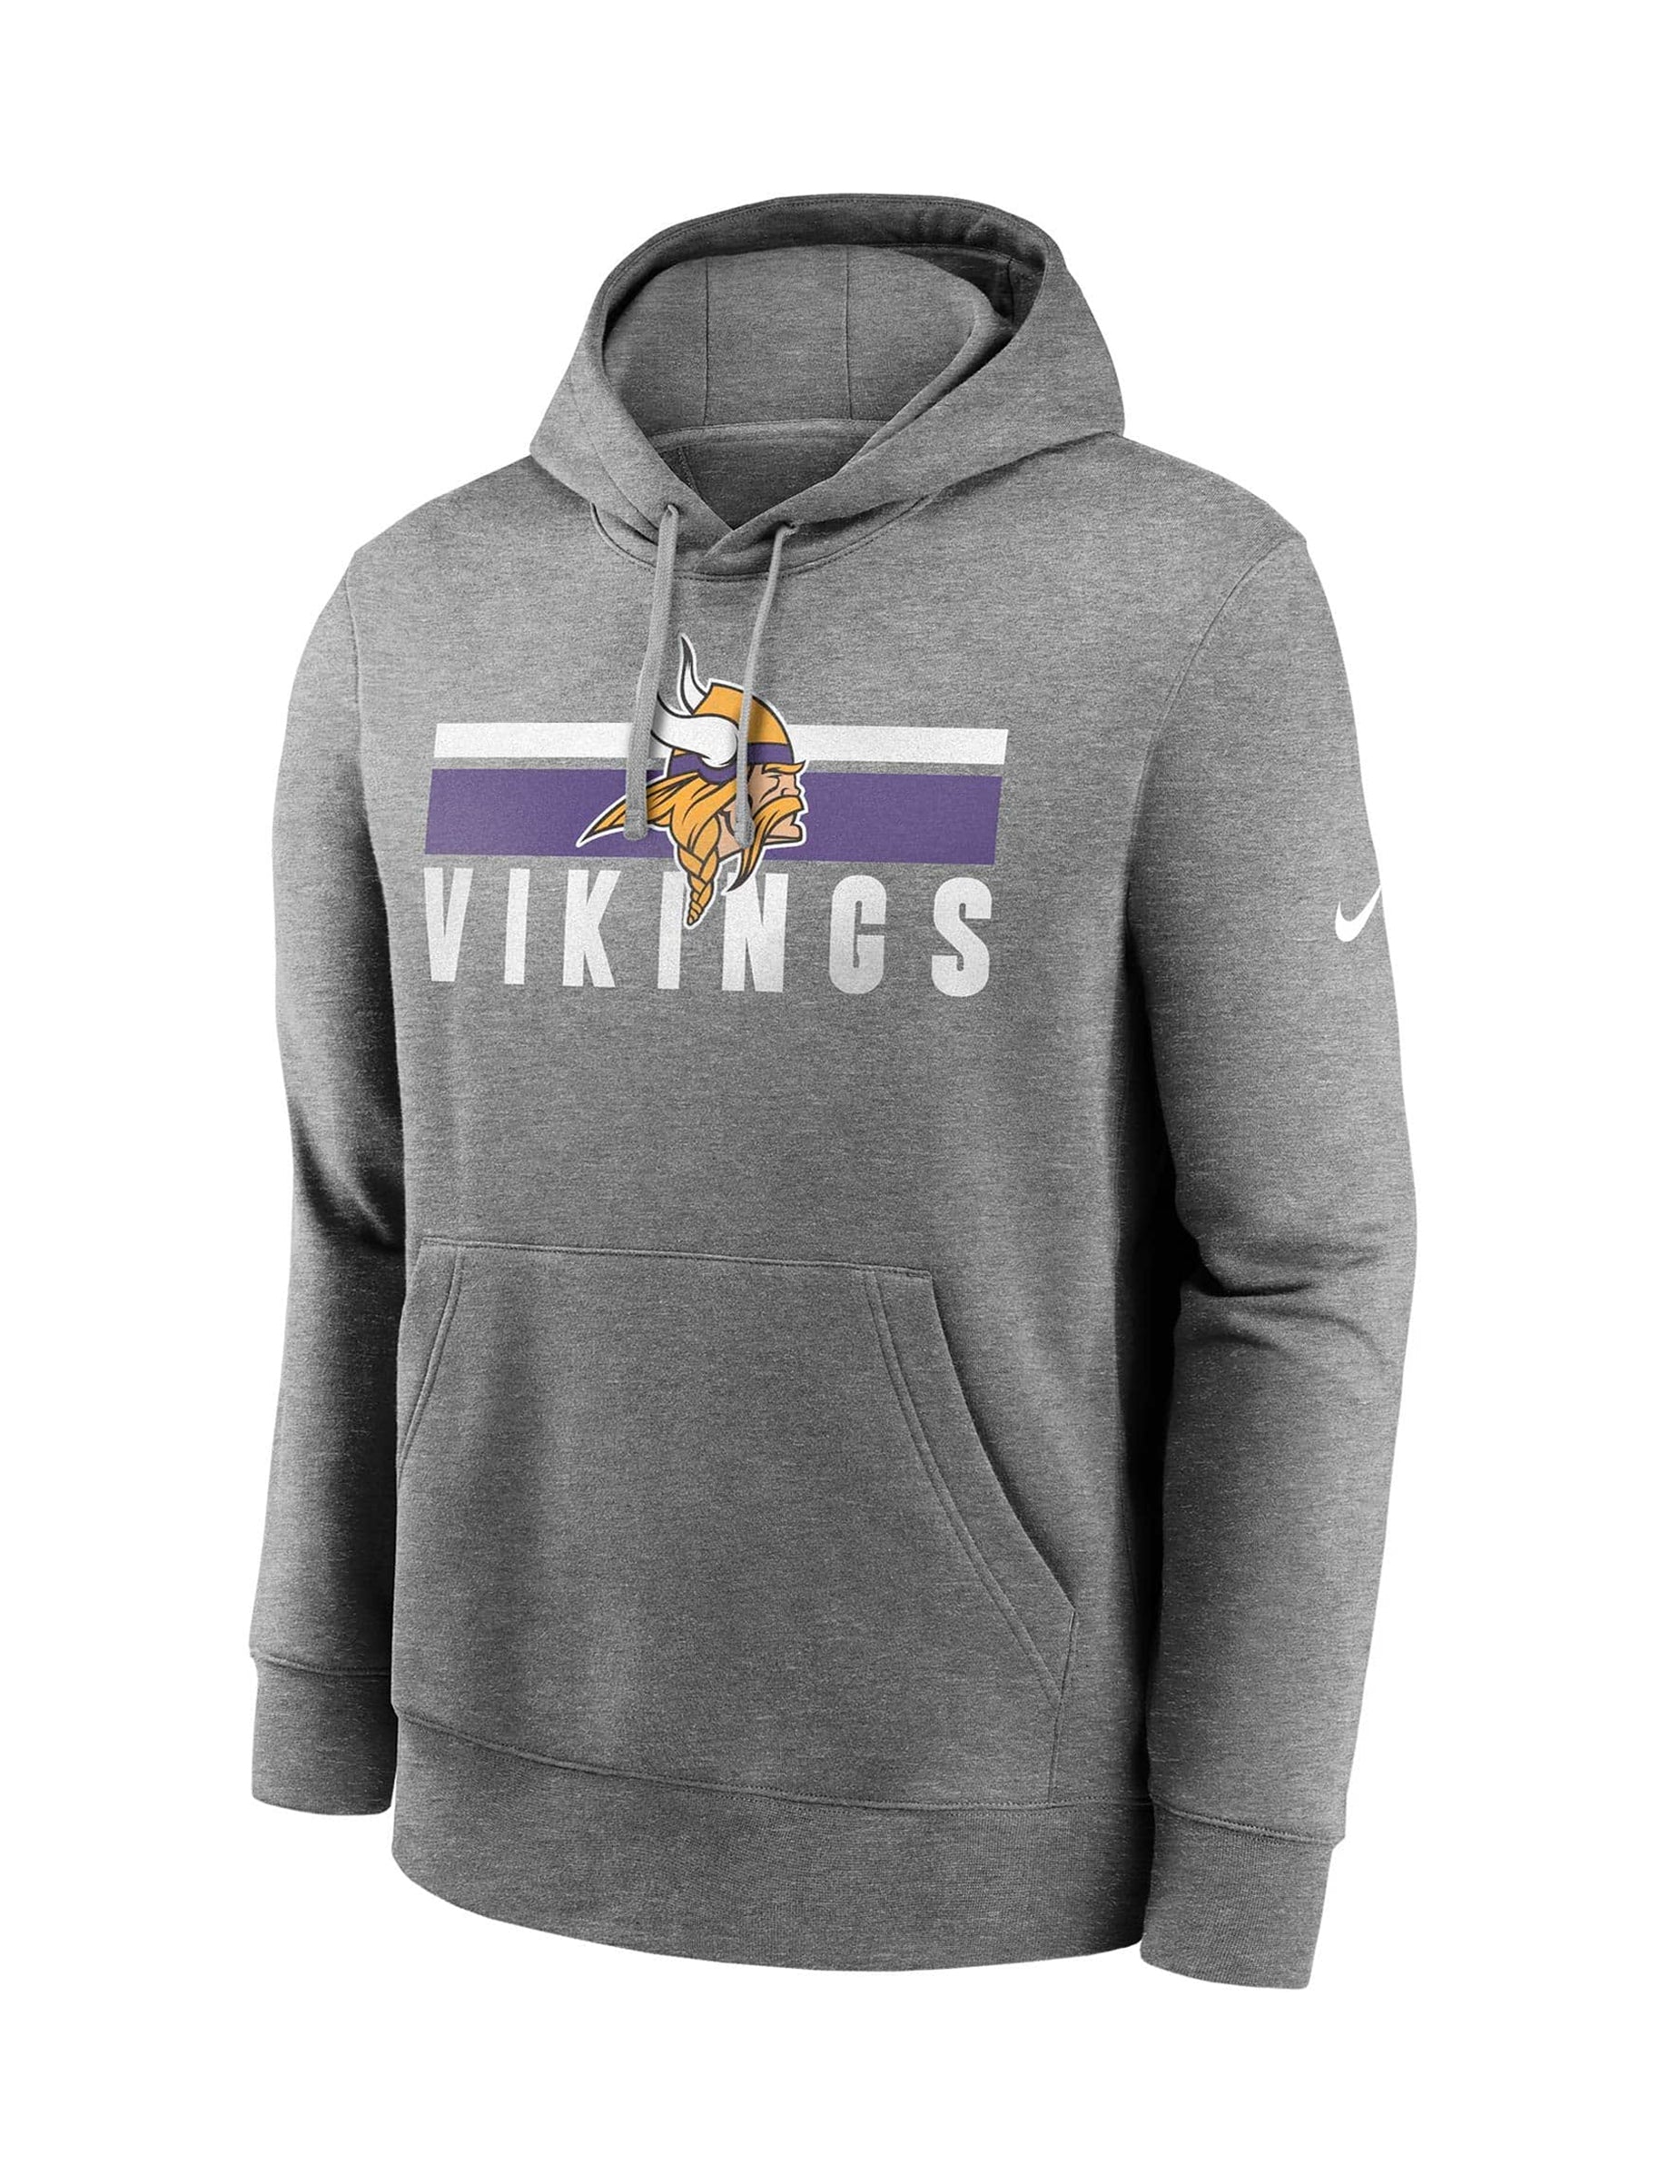 Minnesota Vikings Nike NFL Team Stripes Hoodie Jumper - Heather Grey